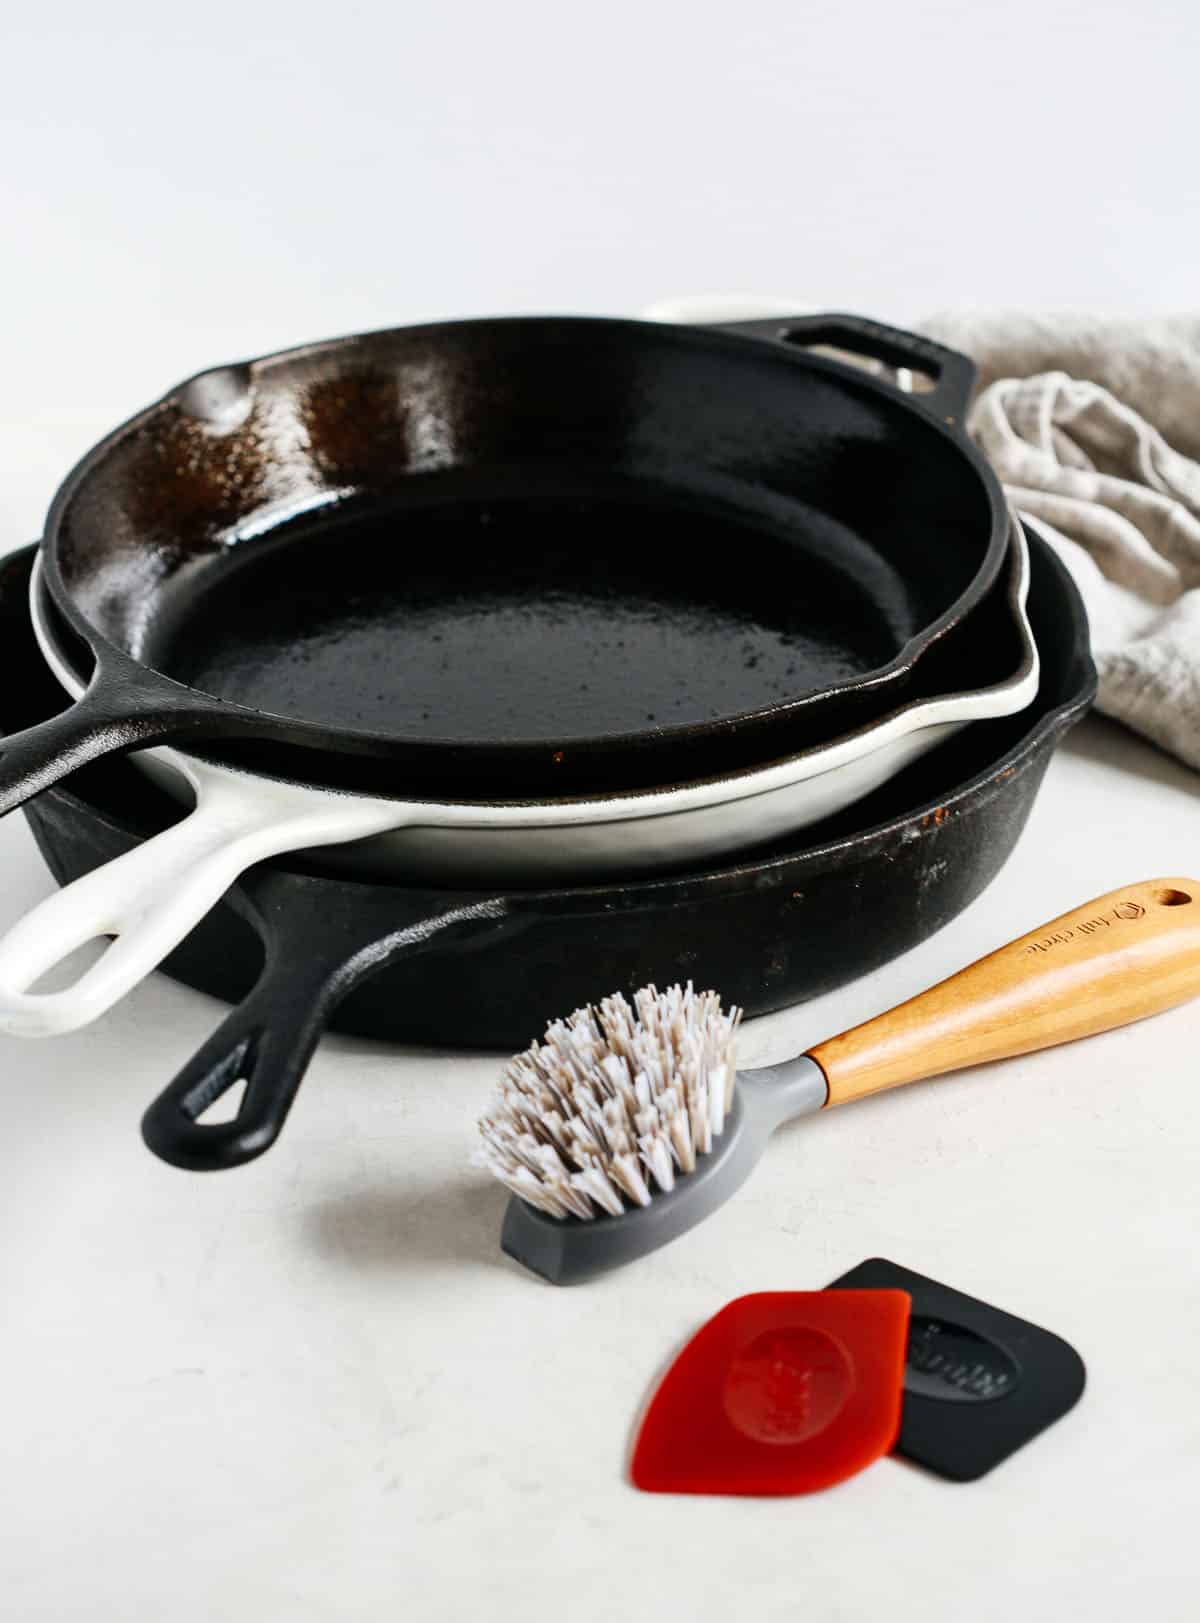 https://www.primaverakitchen.com/wp-content/uploads/2020/02/How-to-clean-a-cast-iron-skillet-Primavera-Kitchen-3.jpg